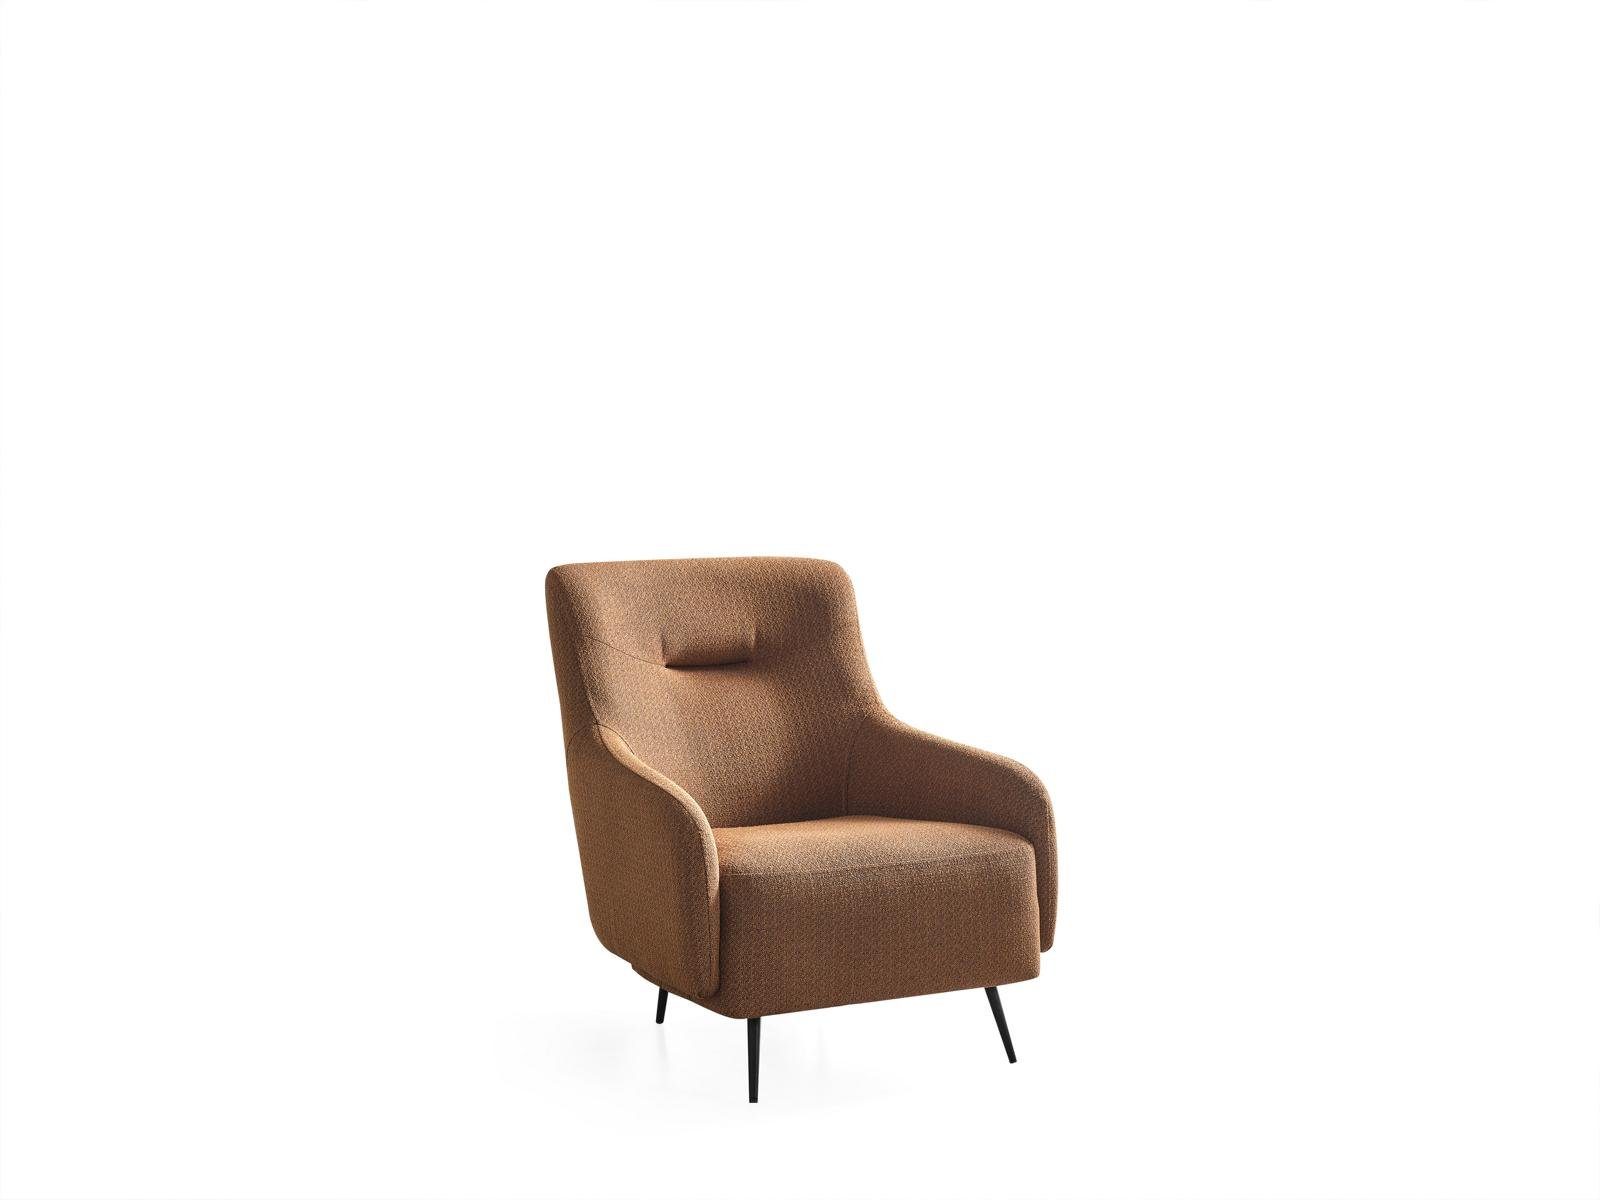 Club Modern Wohnzimmer Polster Lounge Luxus Textil JVmoebel Design Sessel Braun grau Sessel